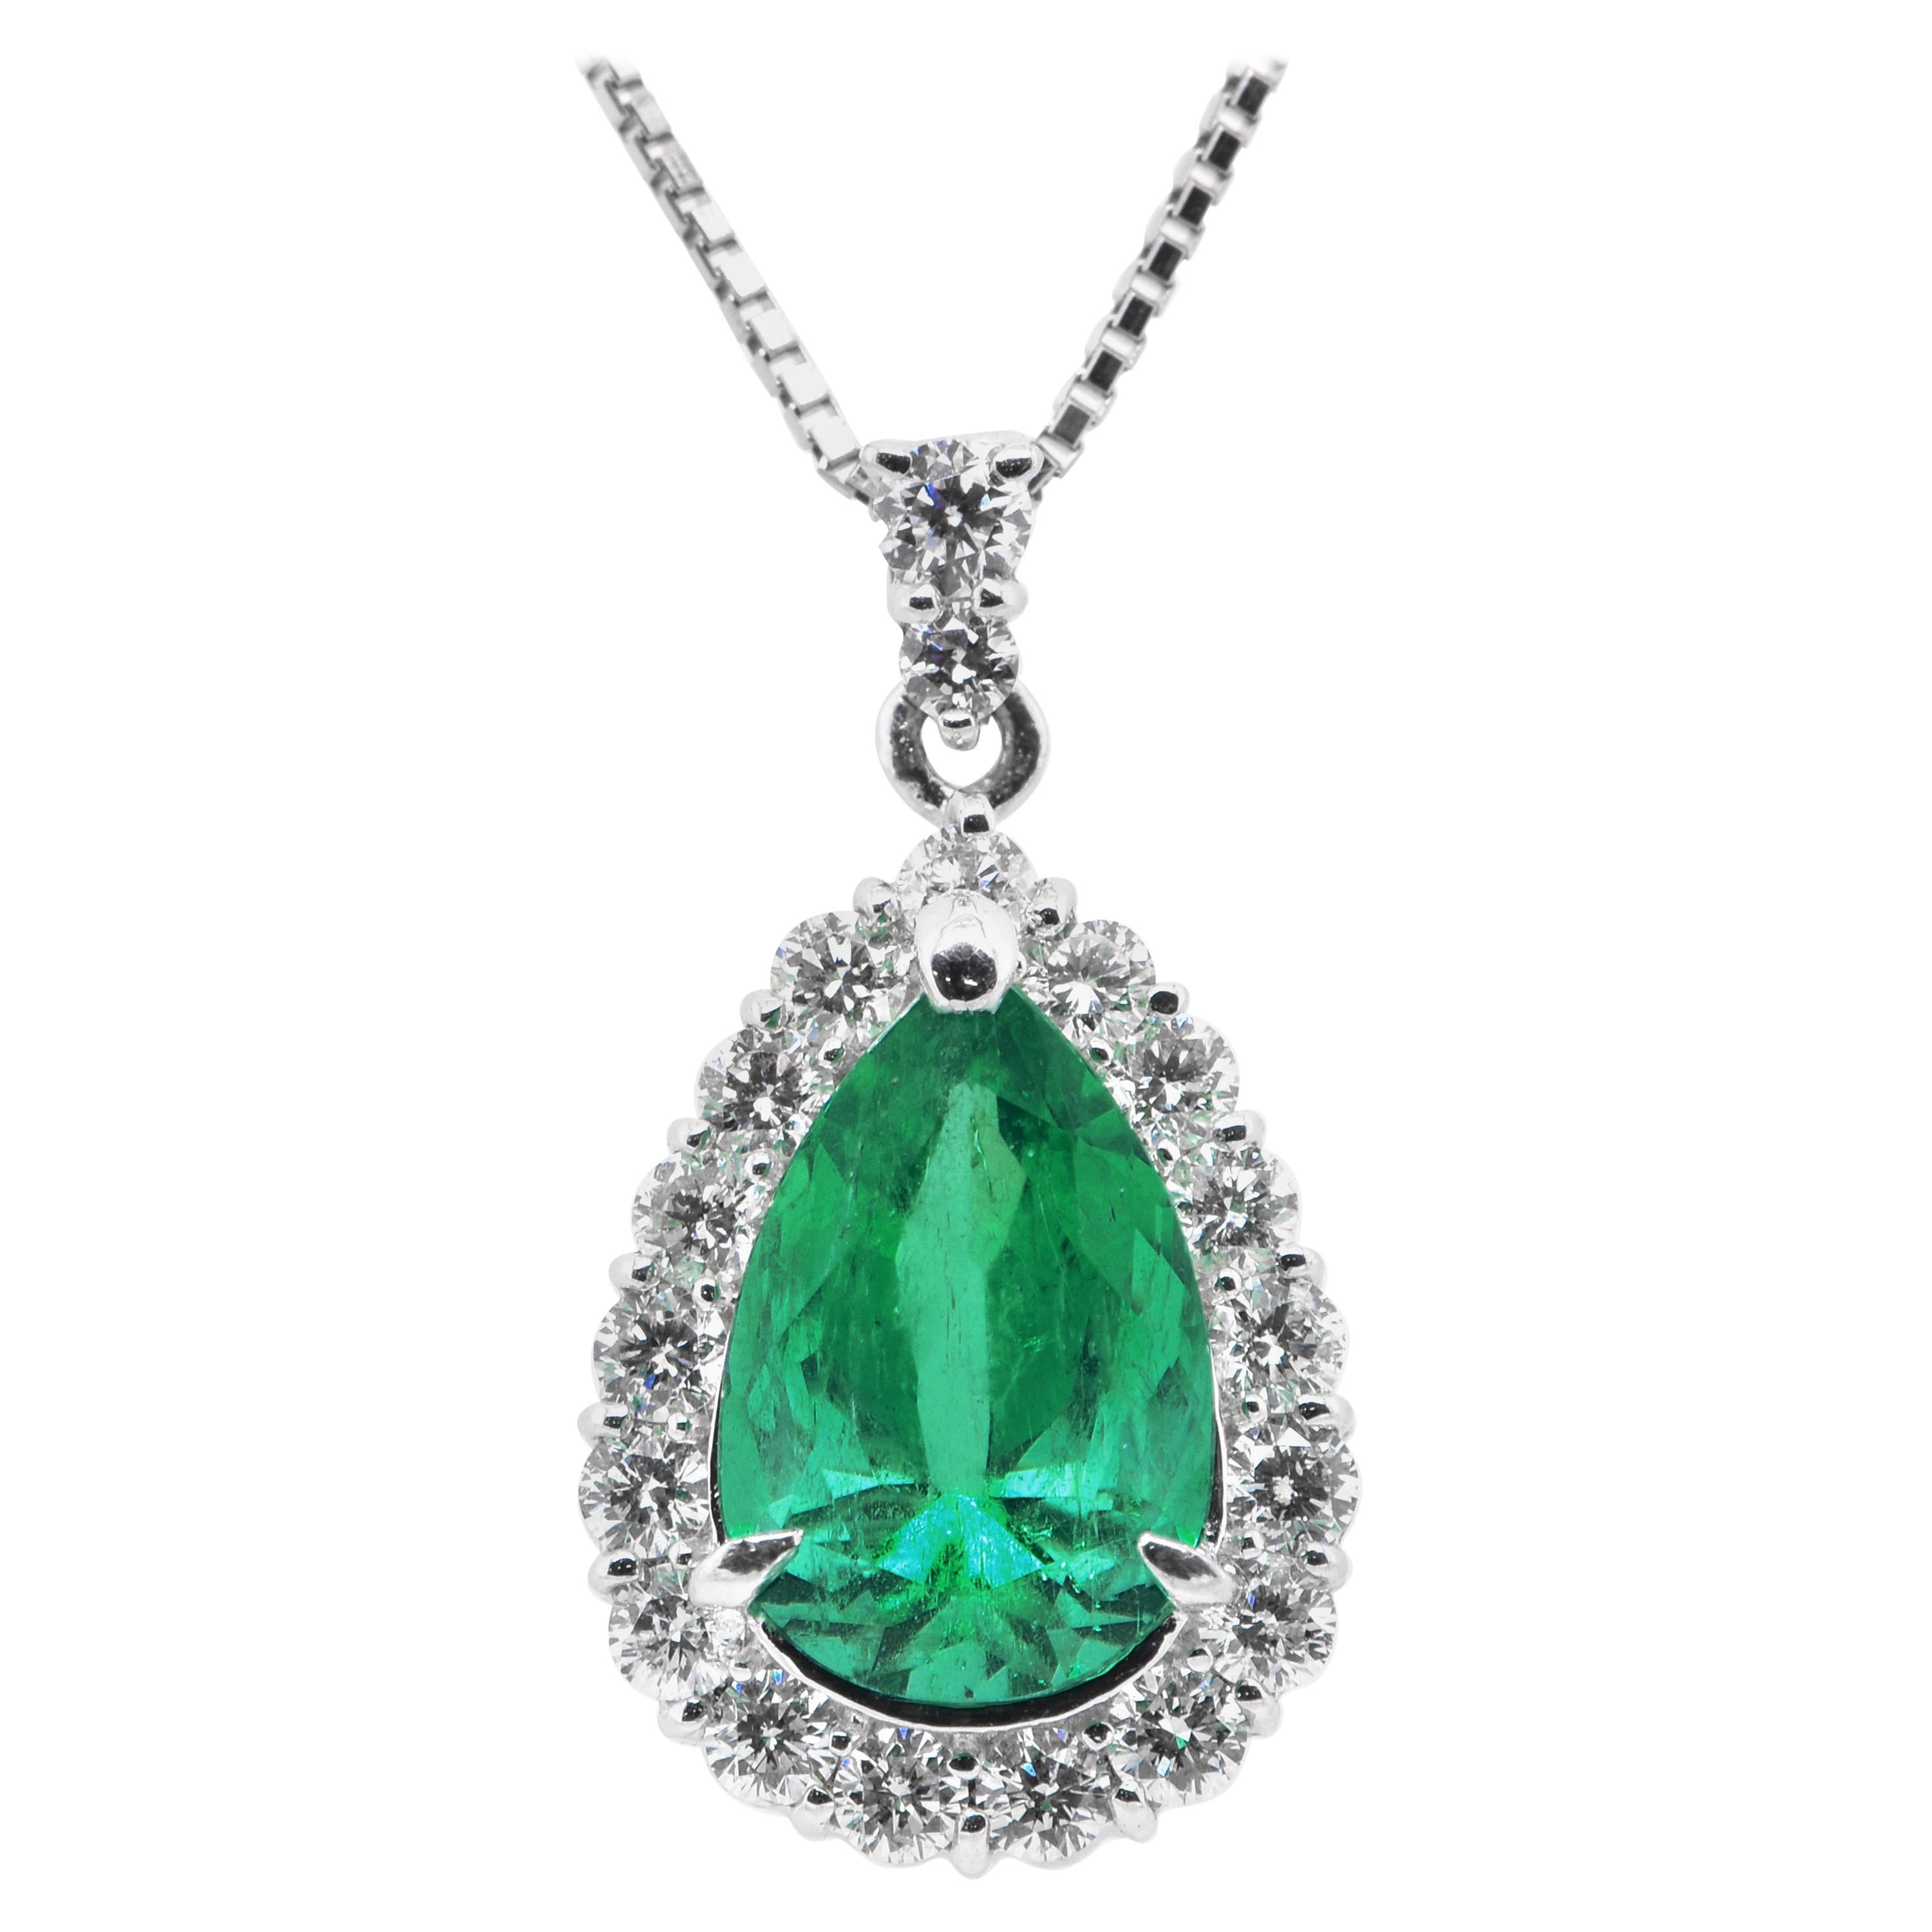 2.40 Carat, Natural, Pear-Shape Emerald and Diamond Pendant Set in Platinum